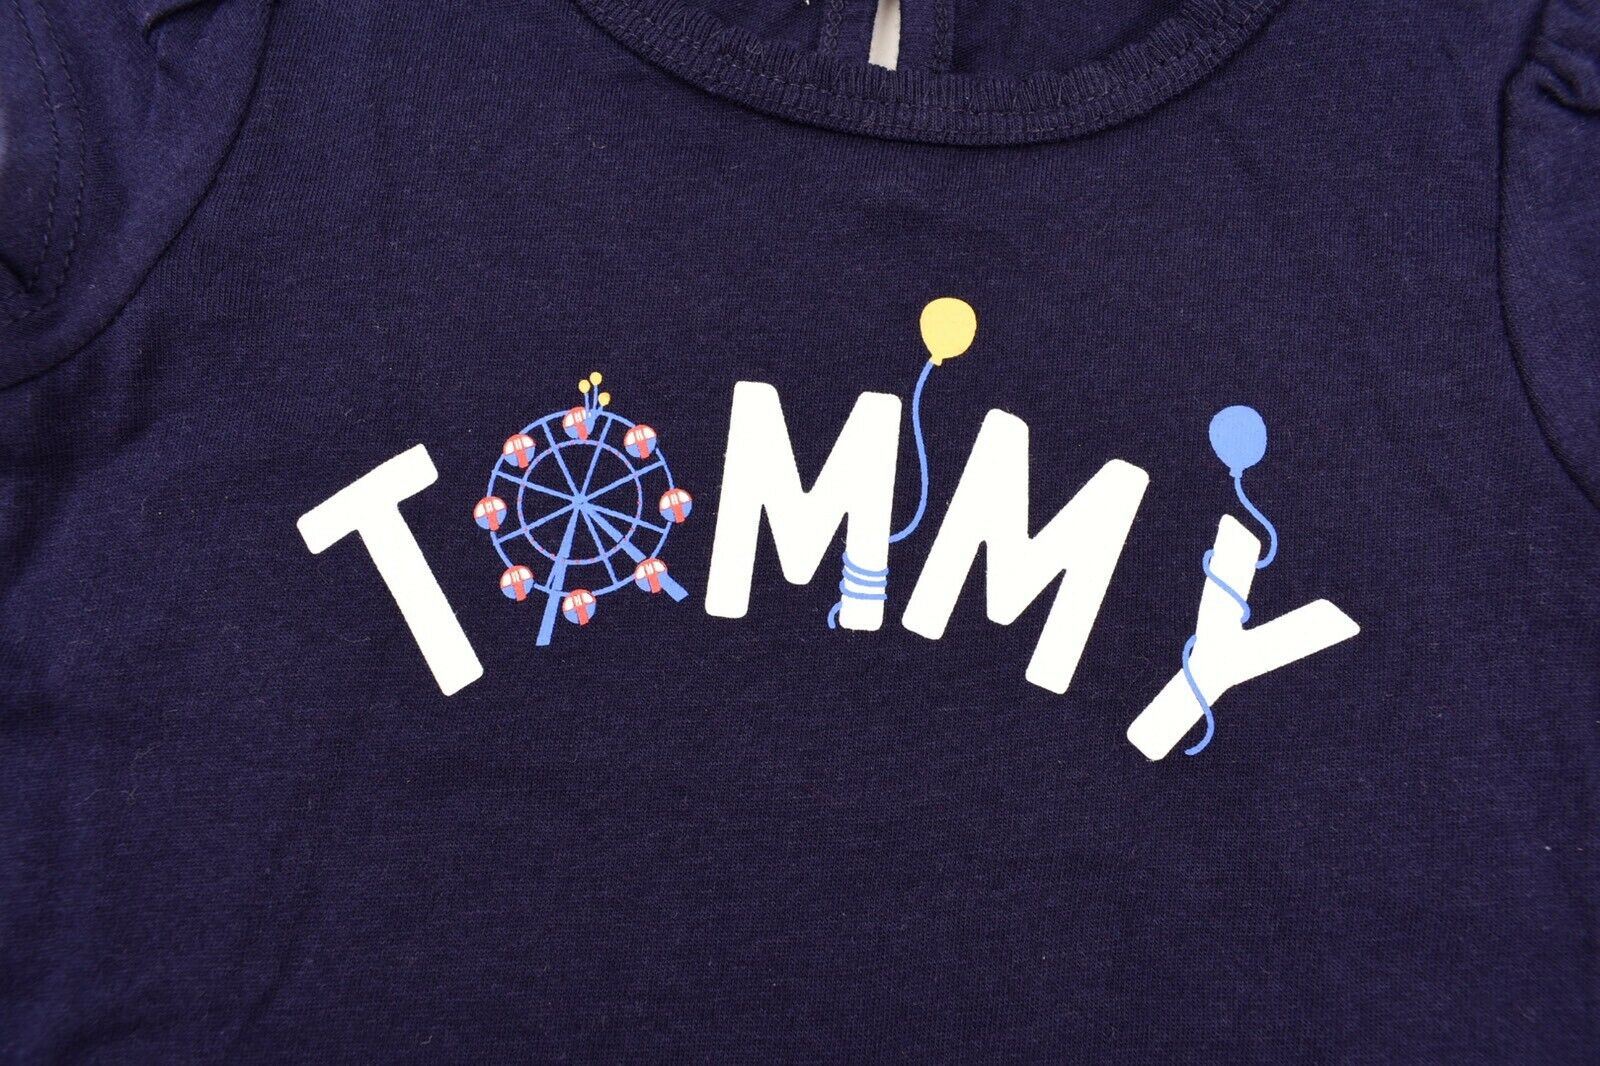 TOMMY HILFIGER Baby Girls Logo Print Top, Navy Blue, size 18 months